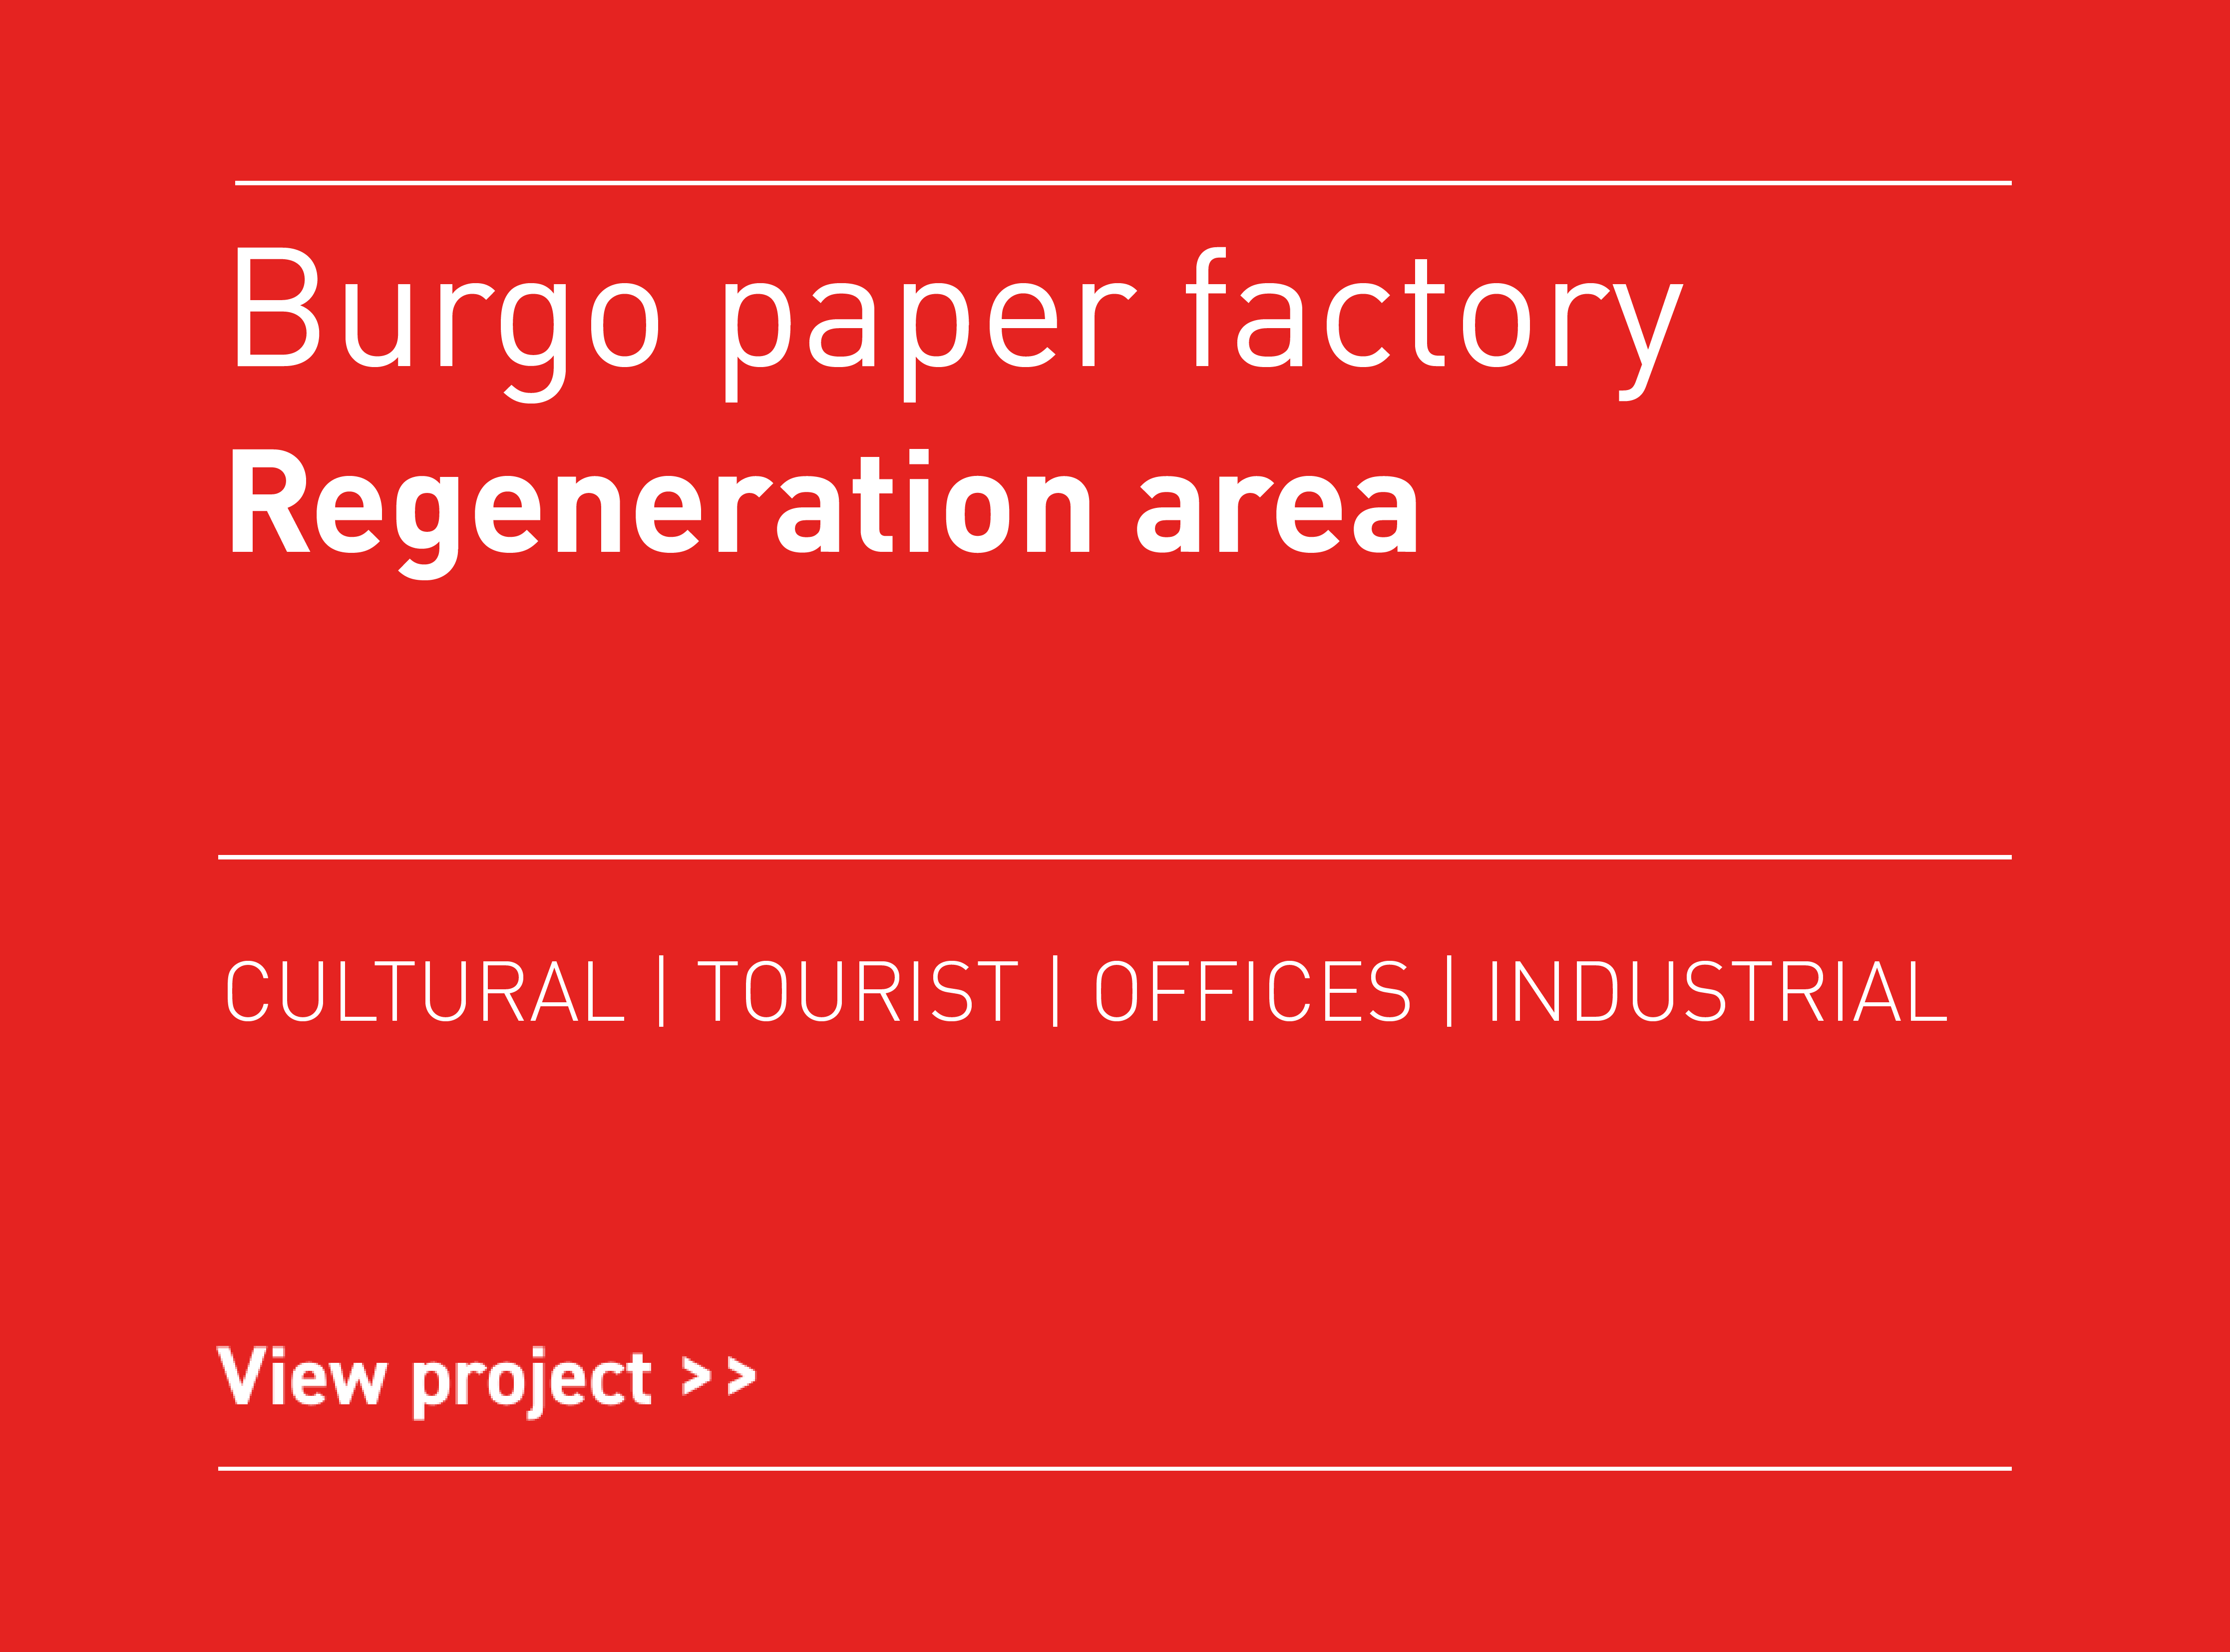 Burgo paper factory